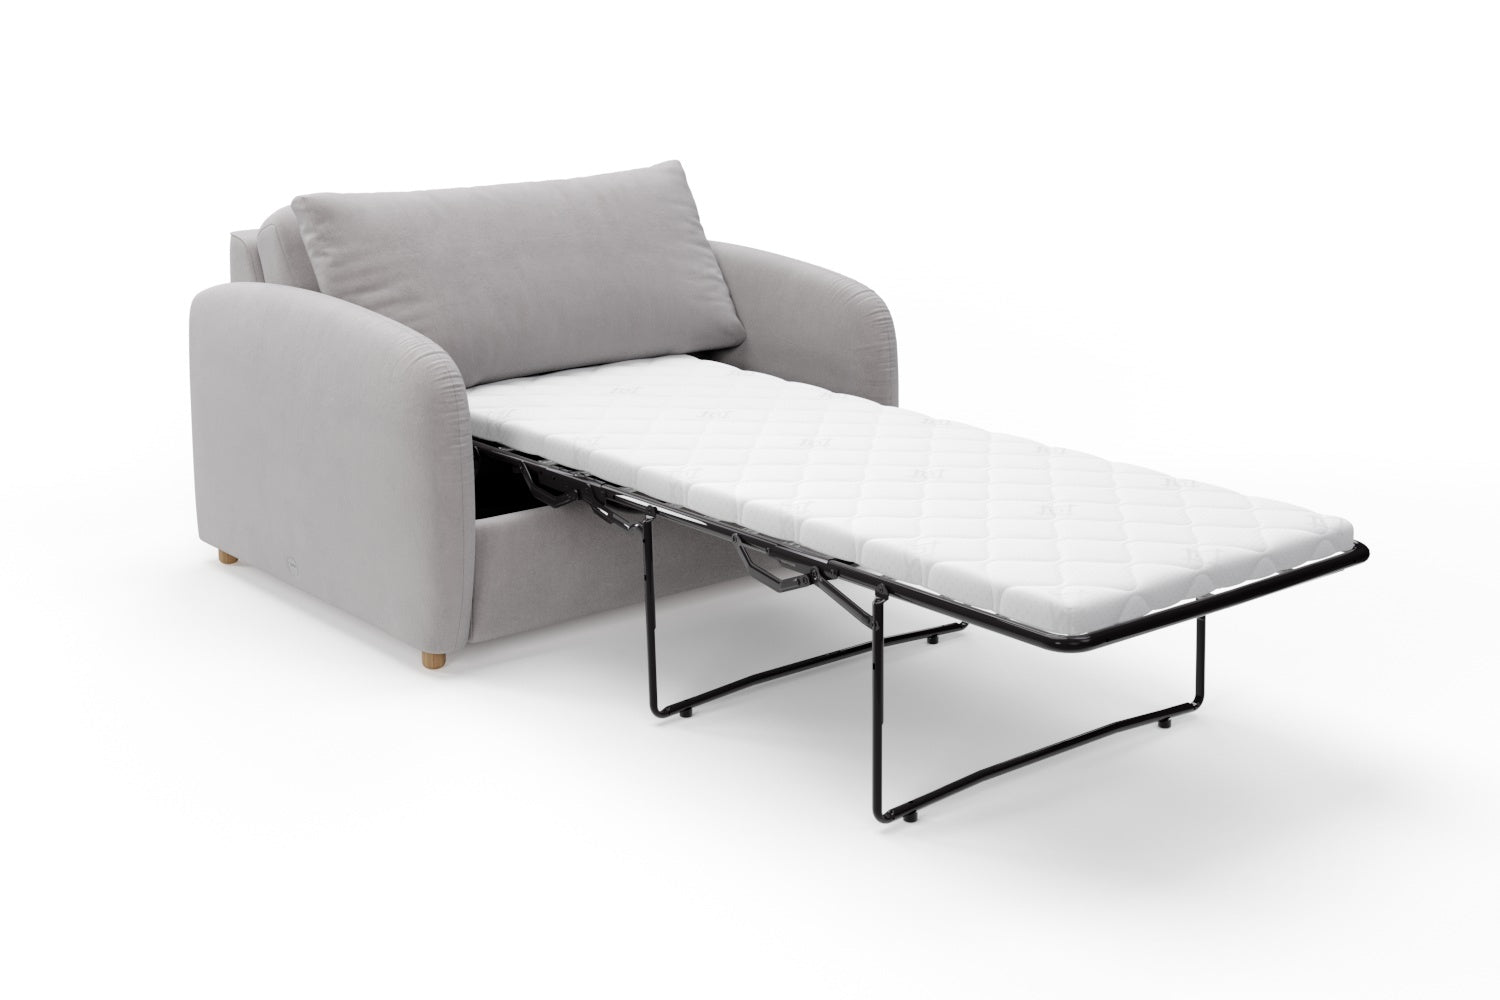 SNUG | The Small Biggie Snuggler Single Sofa Bed in Warm Grey